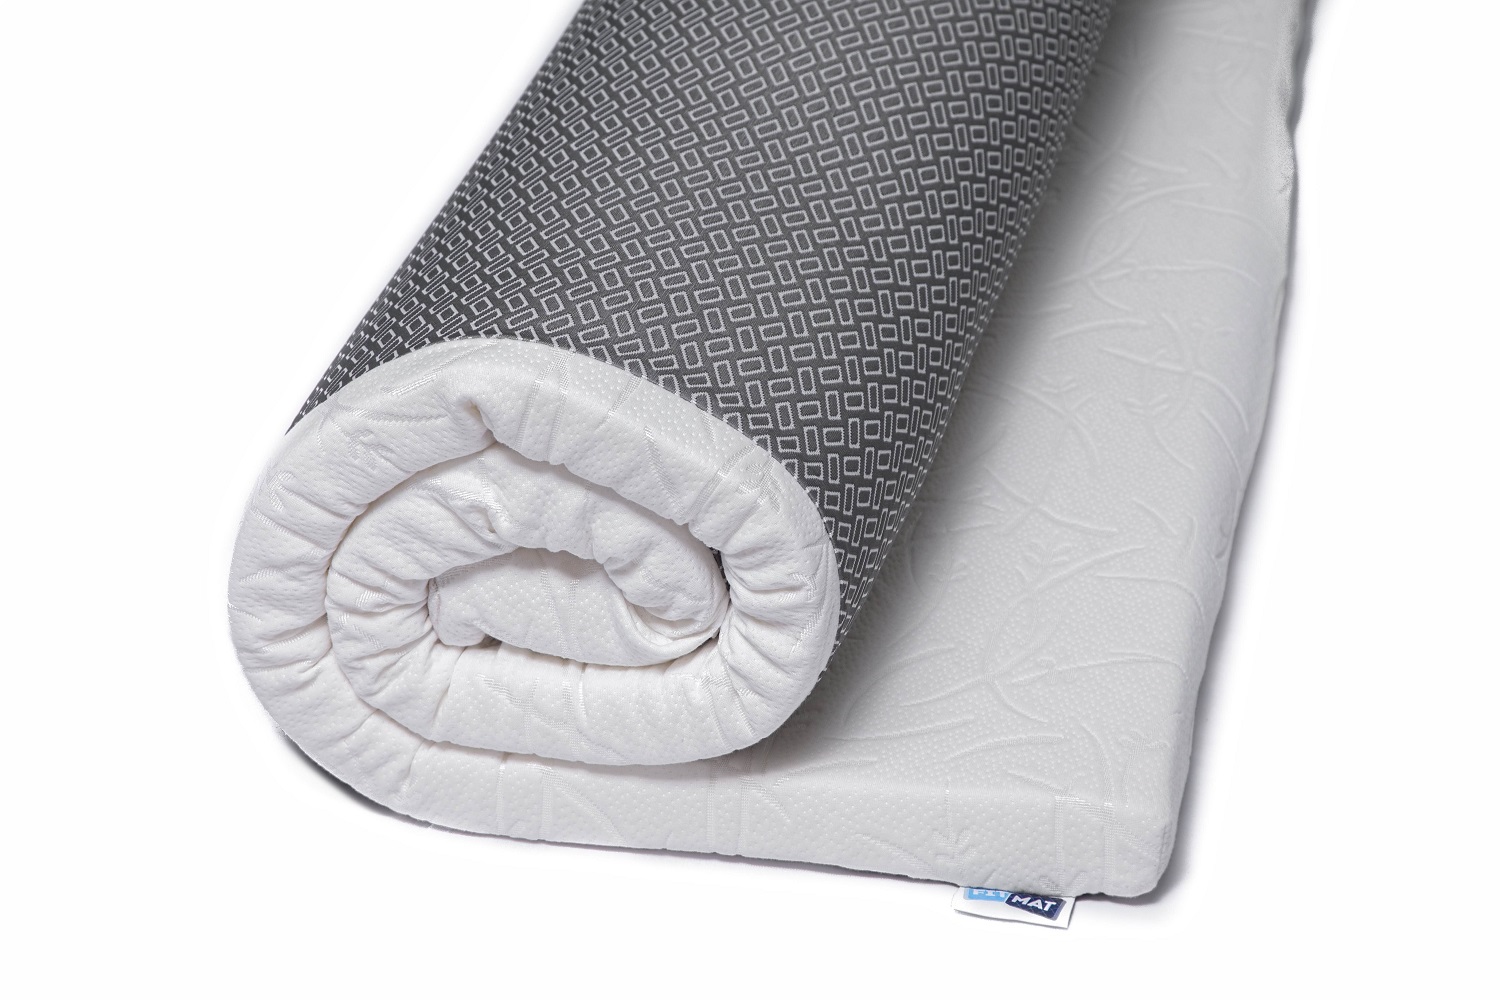 orthopedic mattress with memory foam topper